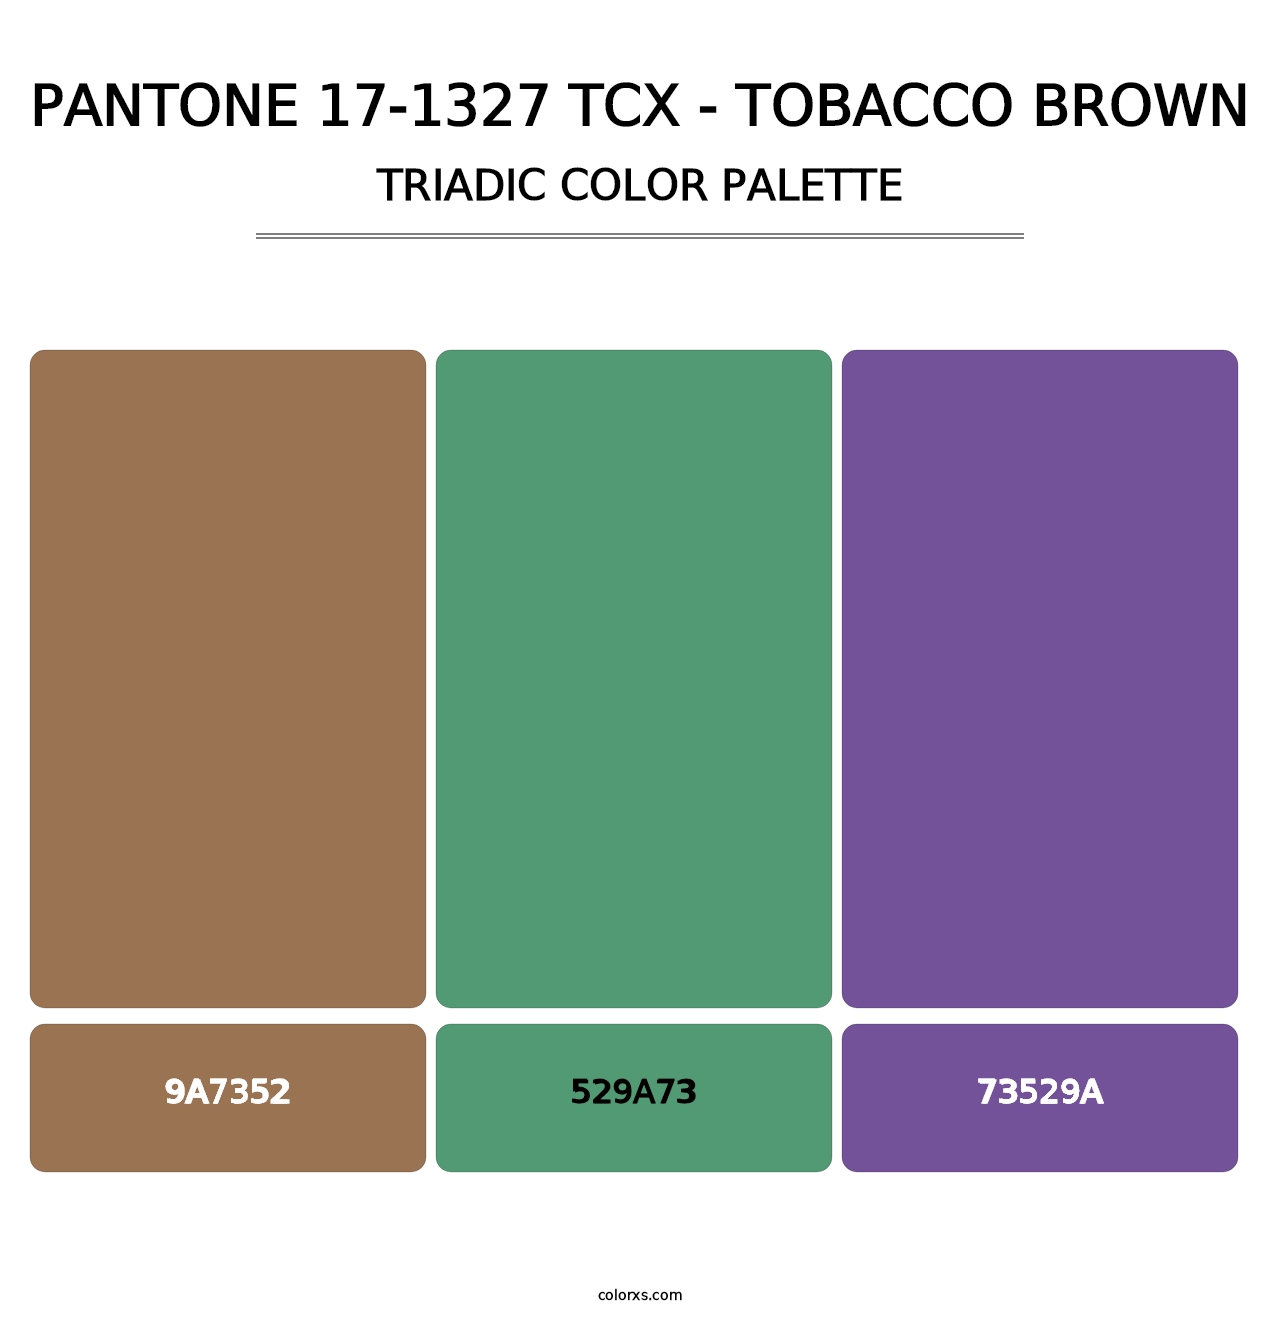 PANTONE 17-1327 TCX - Tobacco Brown - Triadic Color Palette